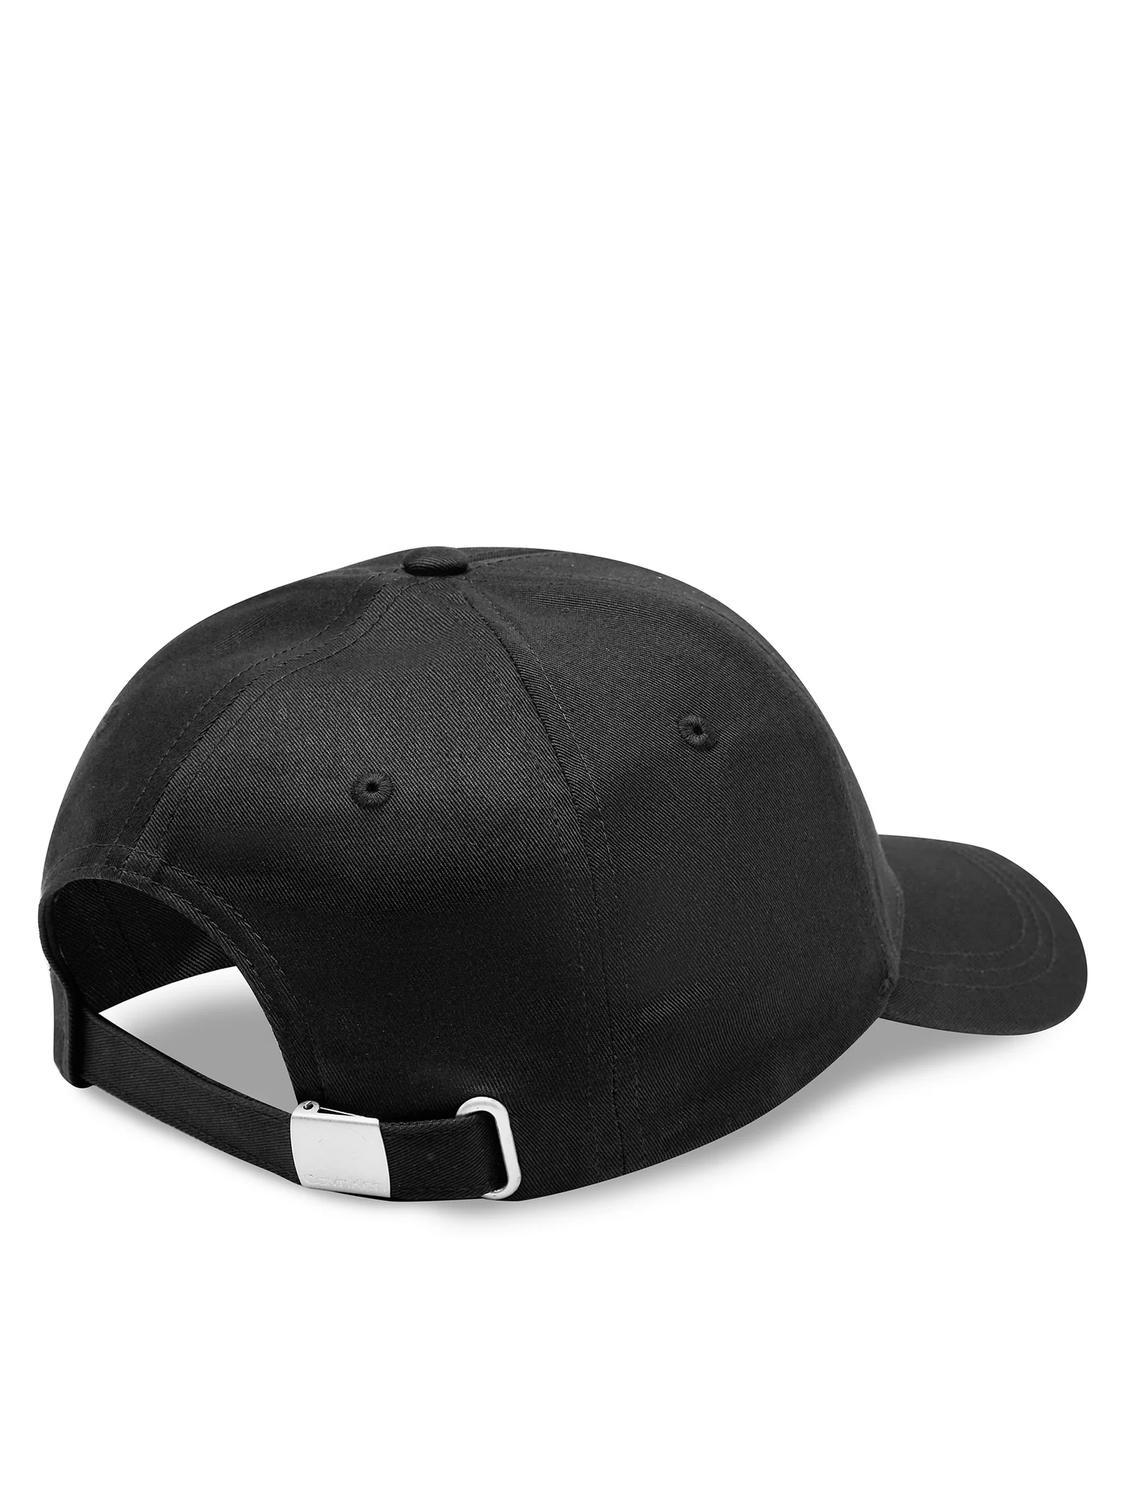 Metal Bb Hat Prices! Buy Ck Klein At Lettering Baseball Black Outlet - Calvin